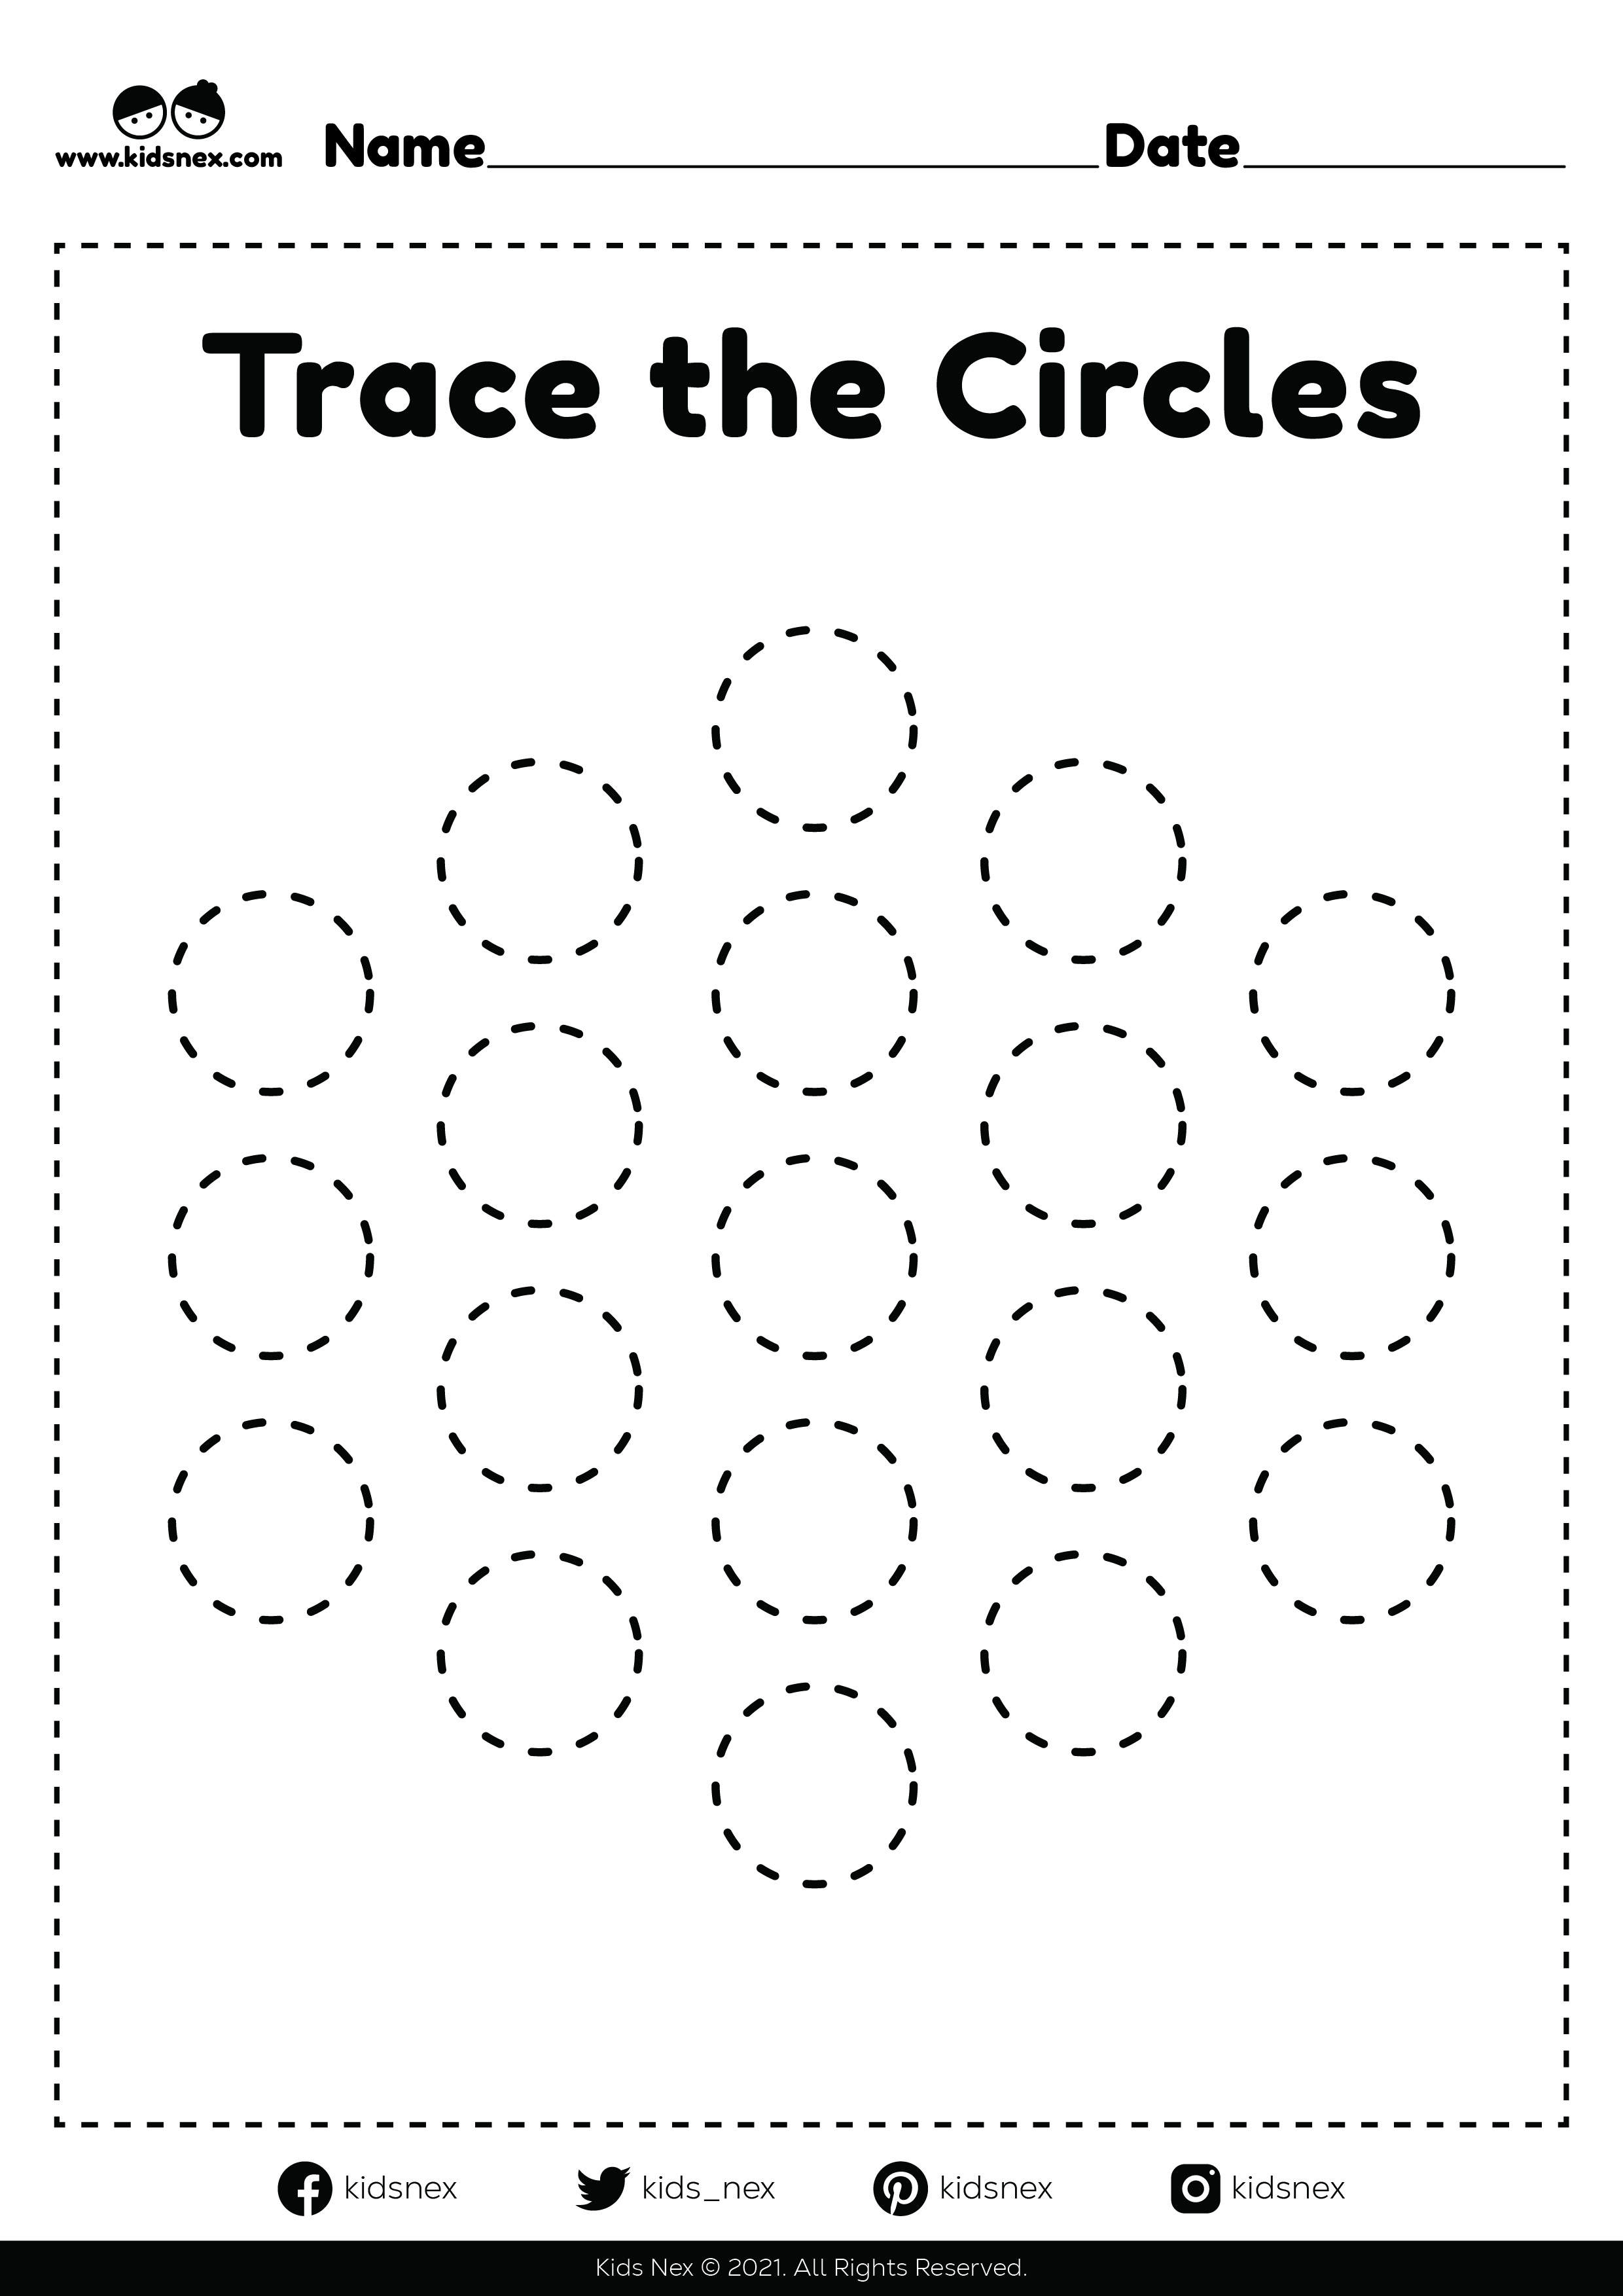 tracing-circles-worksheet-free-printable-www-kidsnex